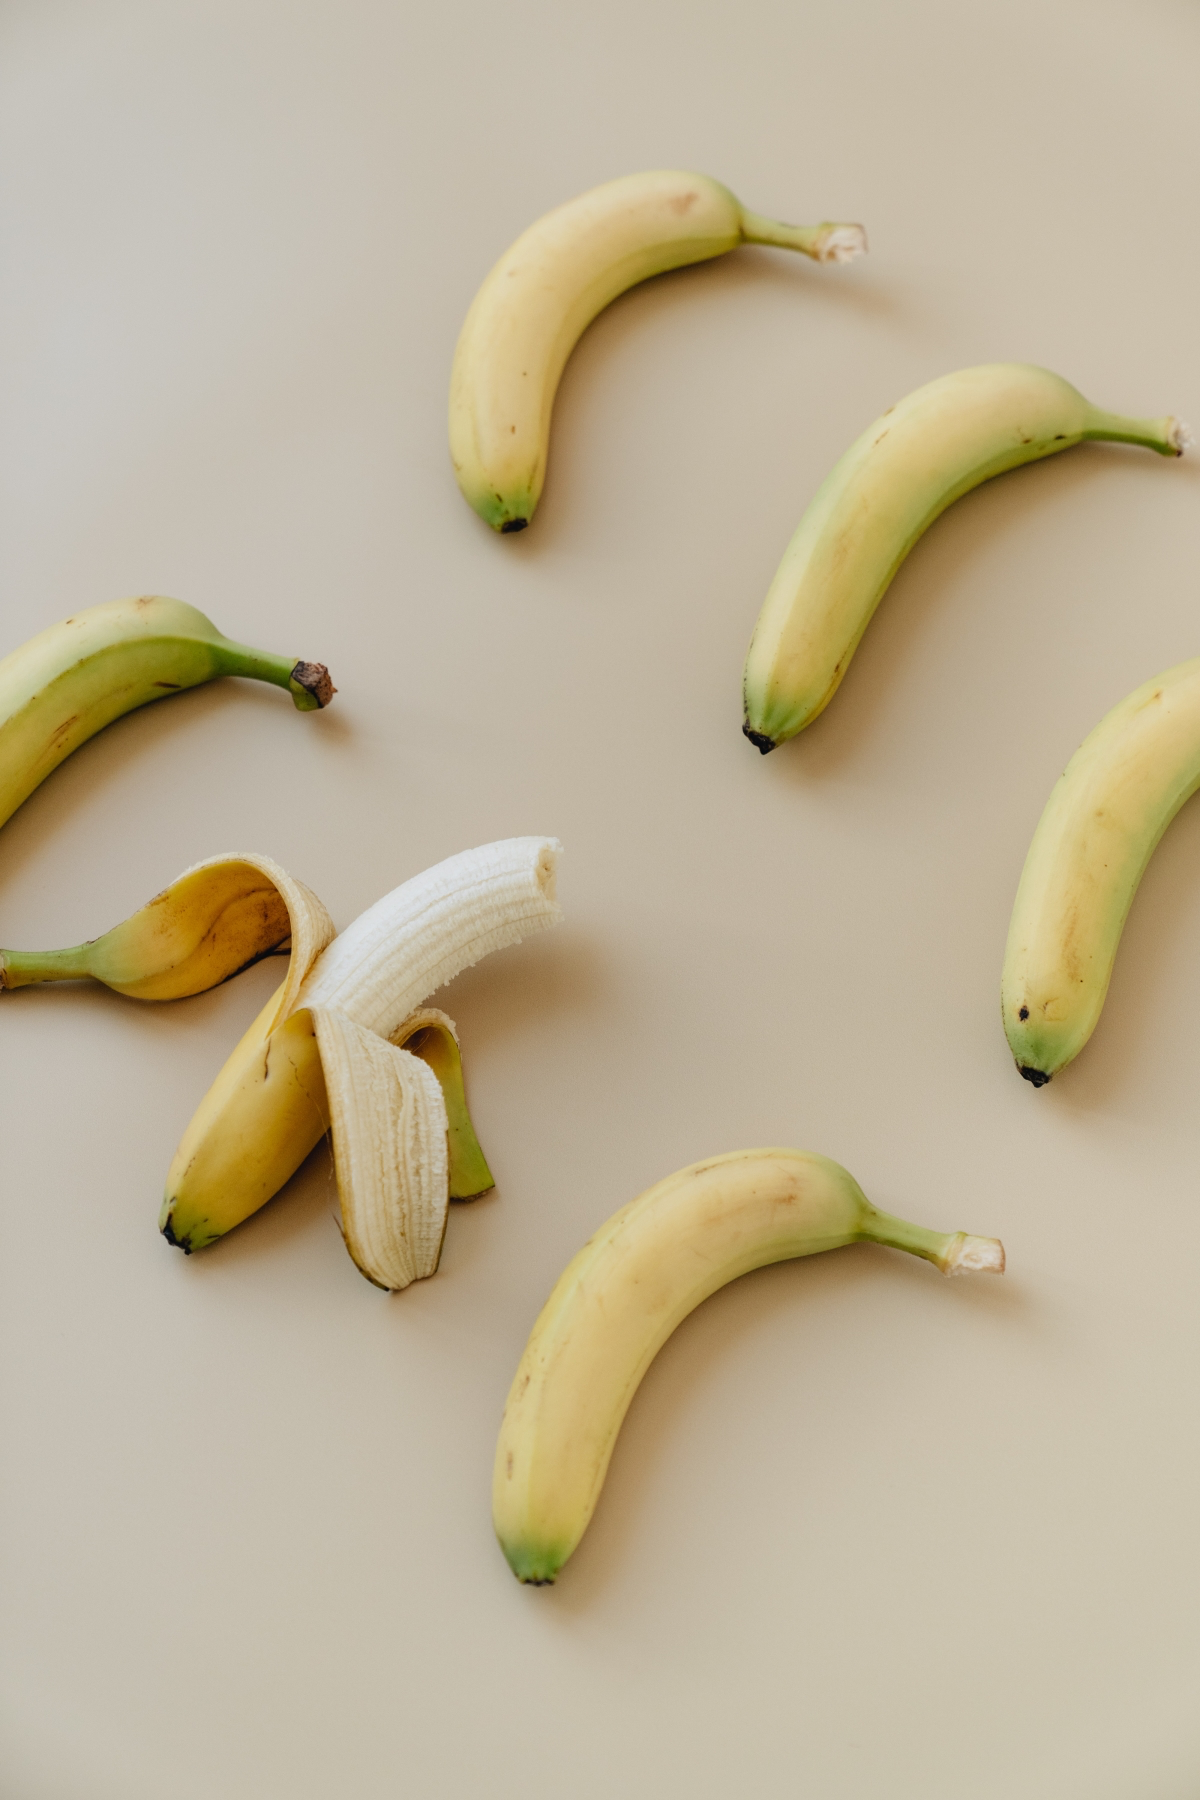 how to choose ripe bananas